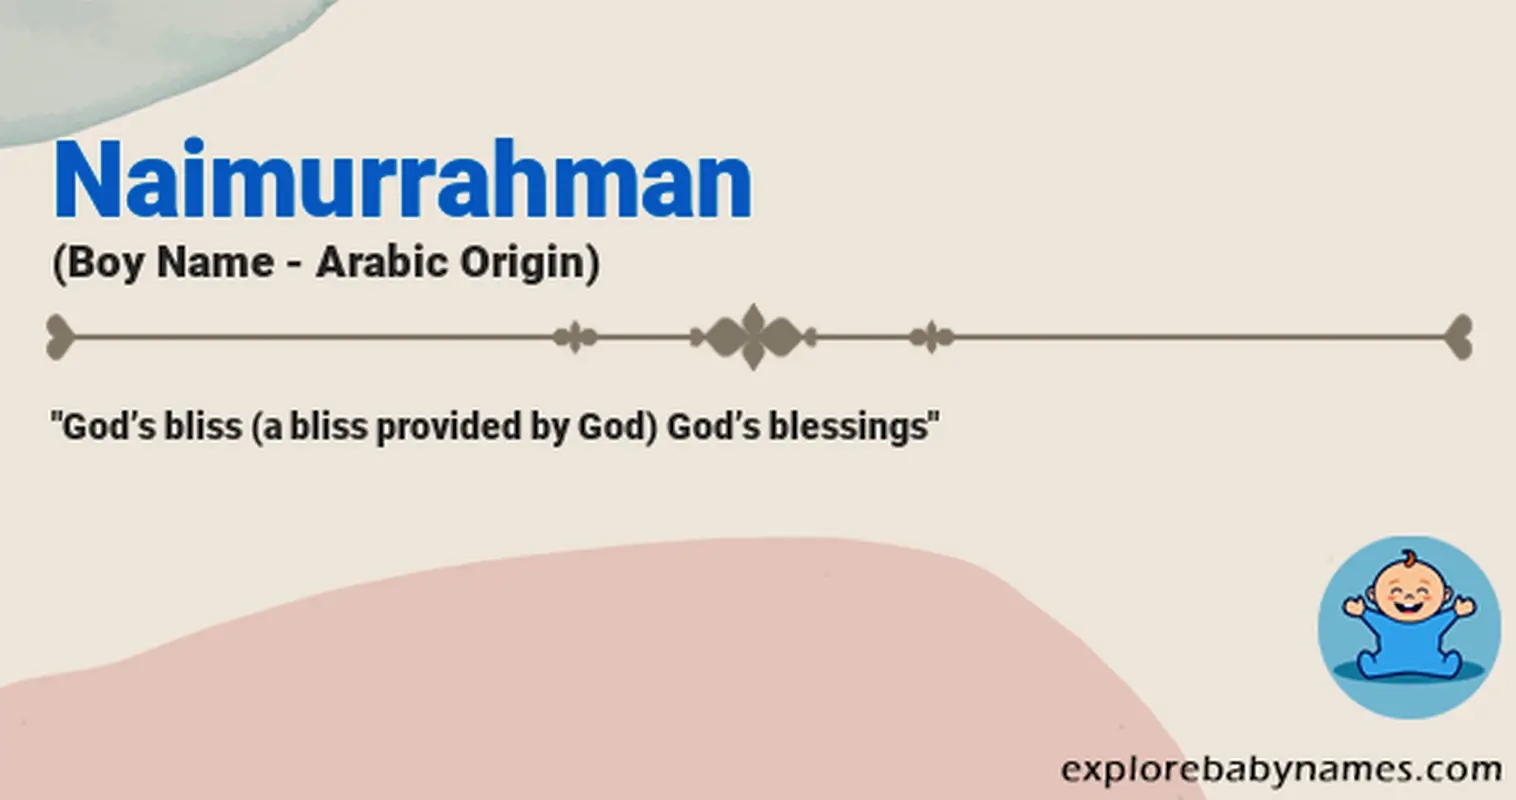 Meaning of Naimurrahman